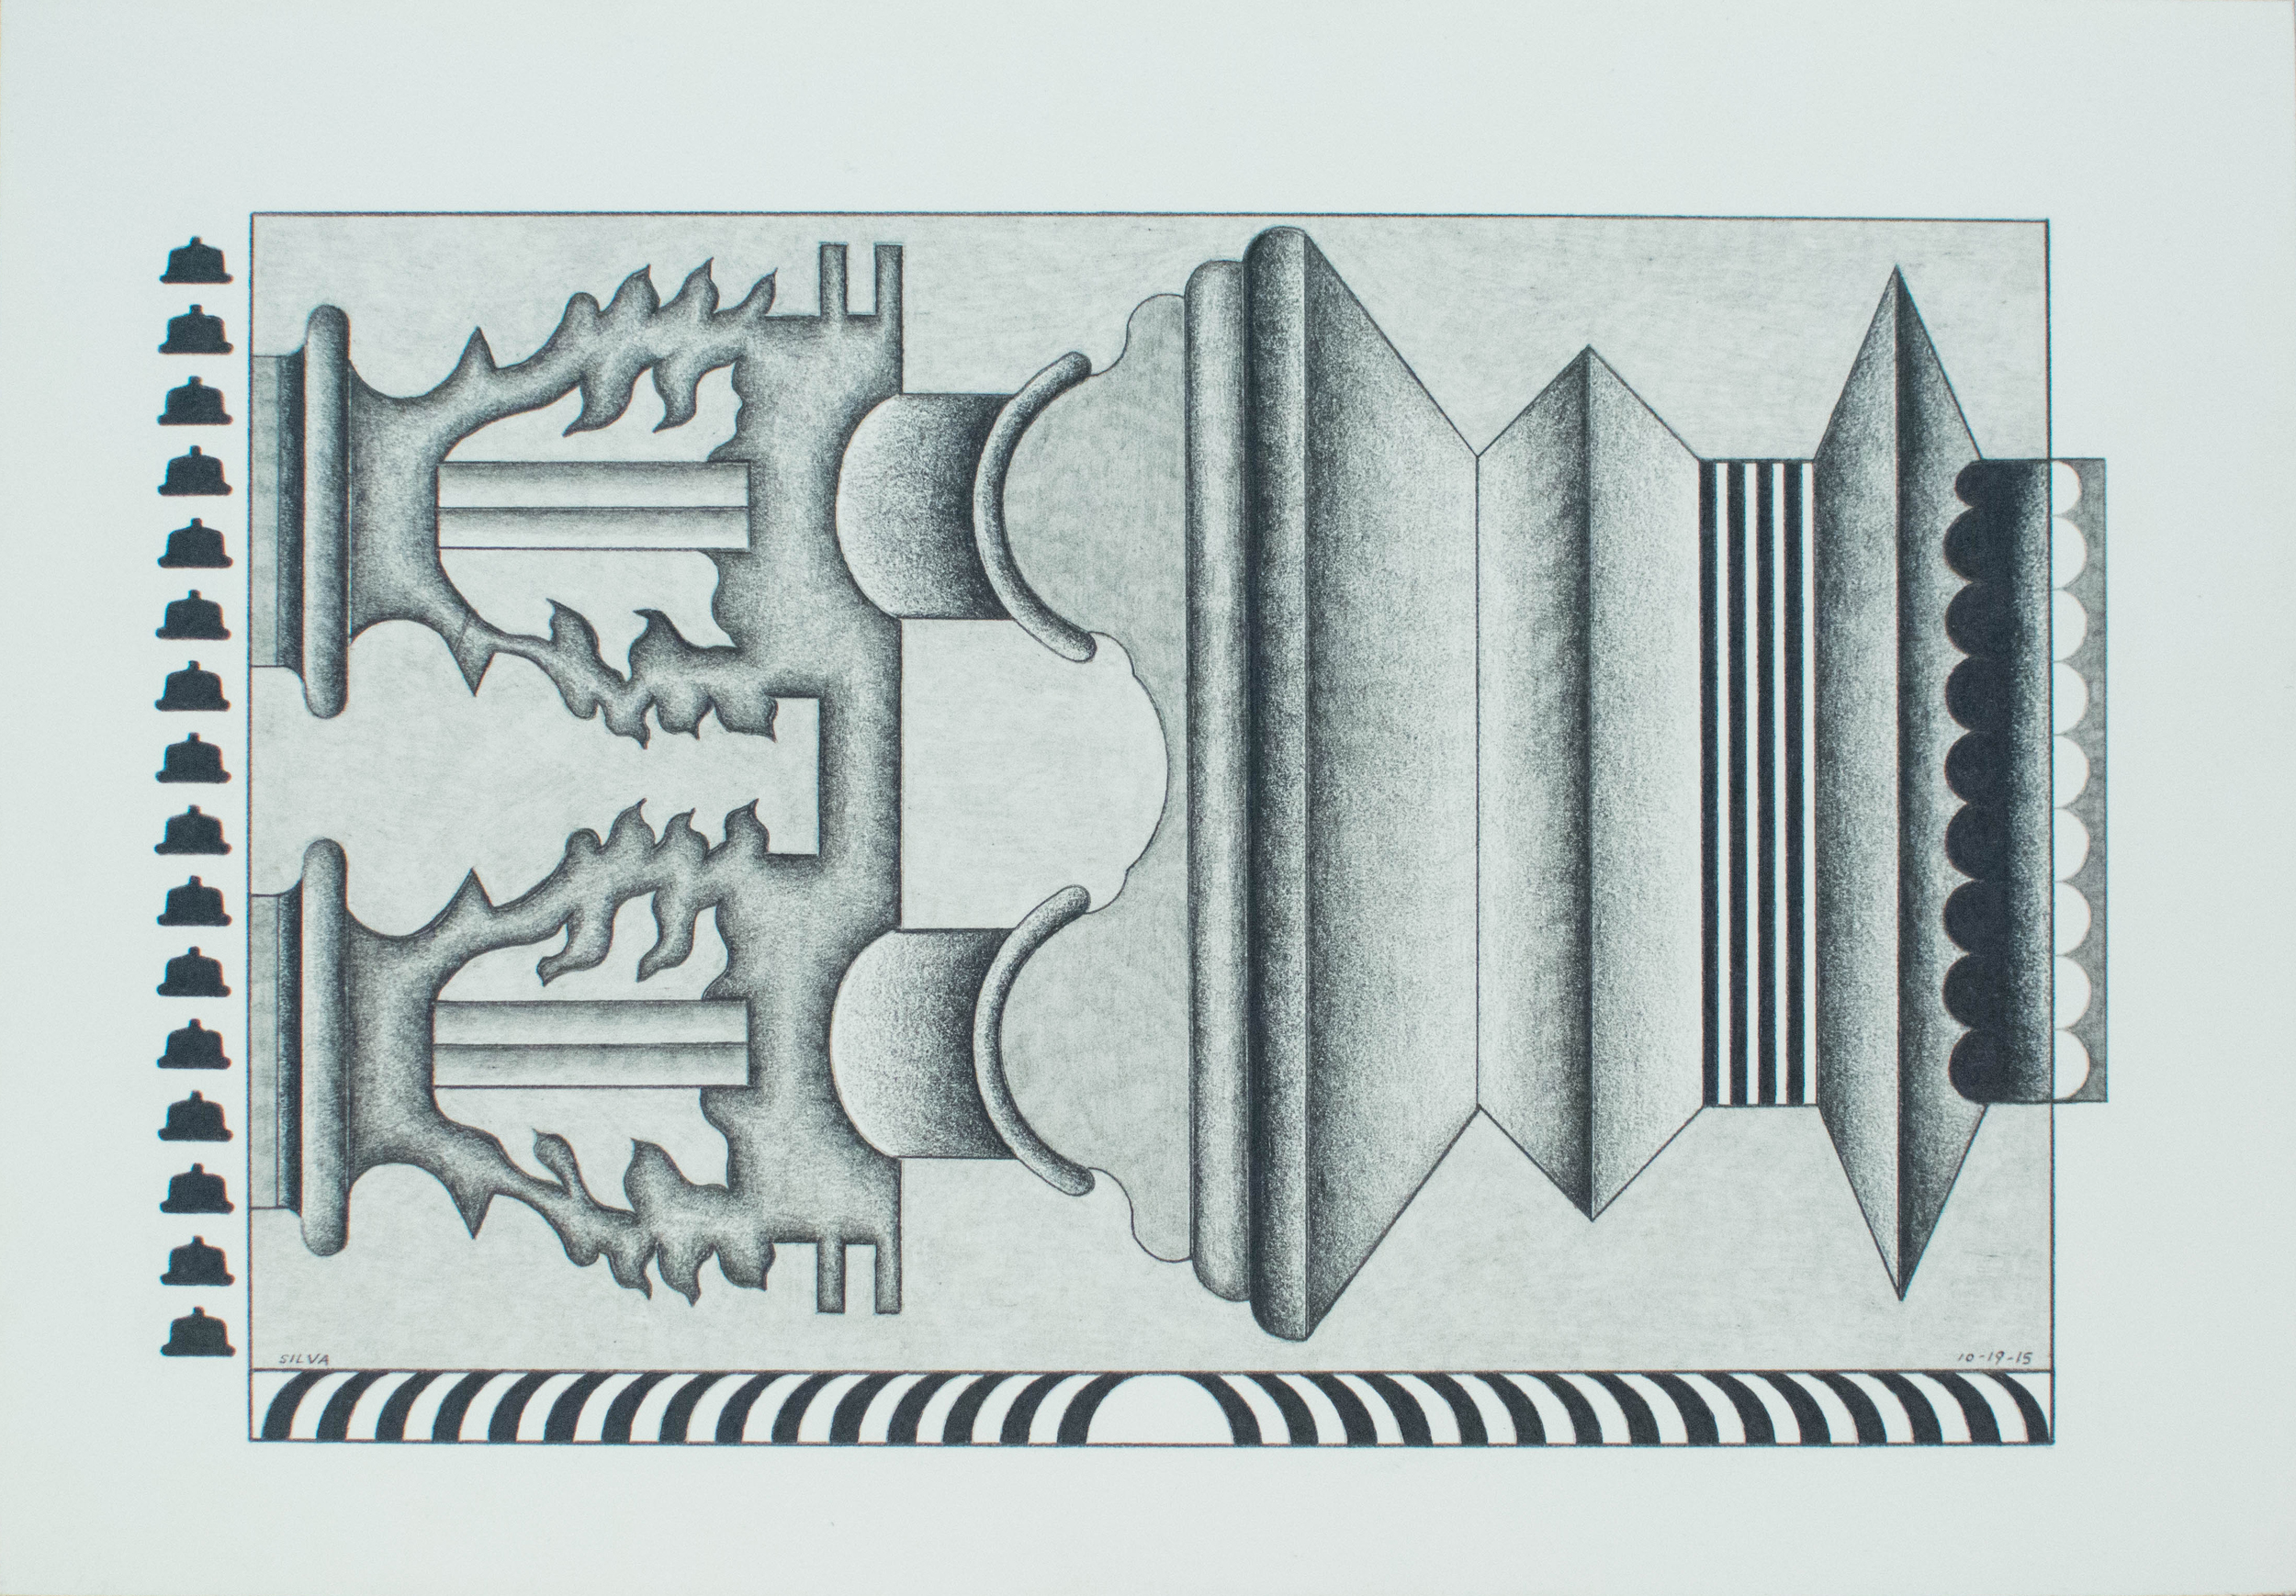 10-19-15, 2015, Graphite on paper, 7 x 10 inches